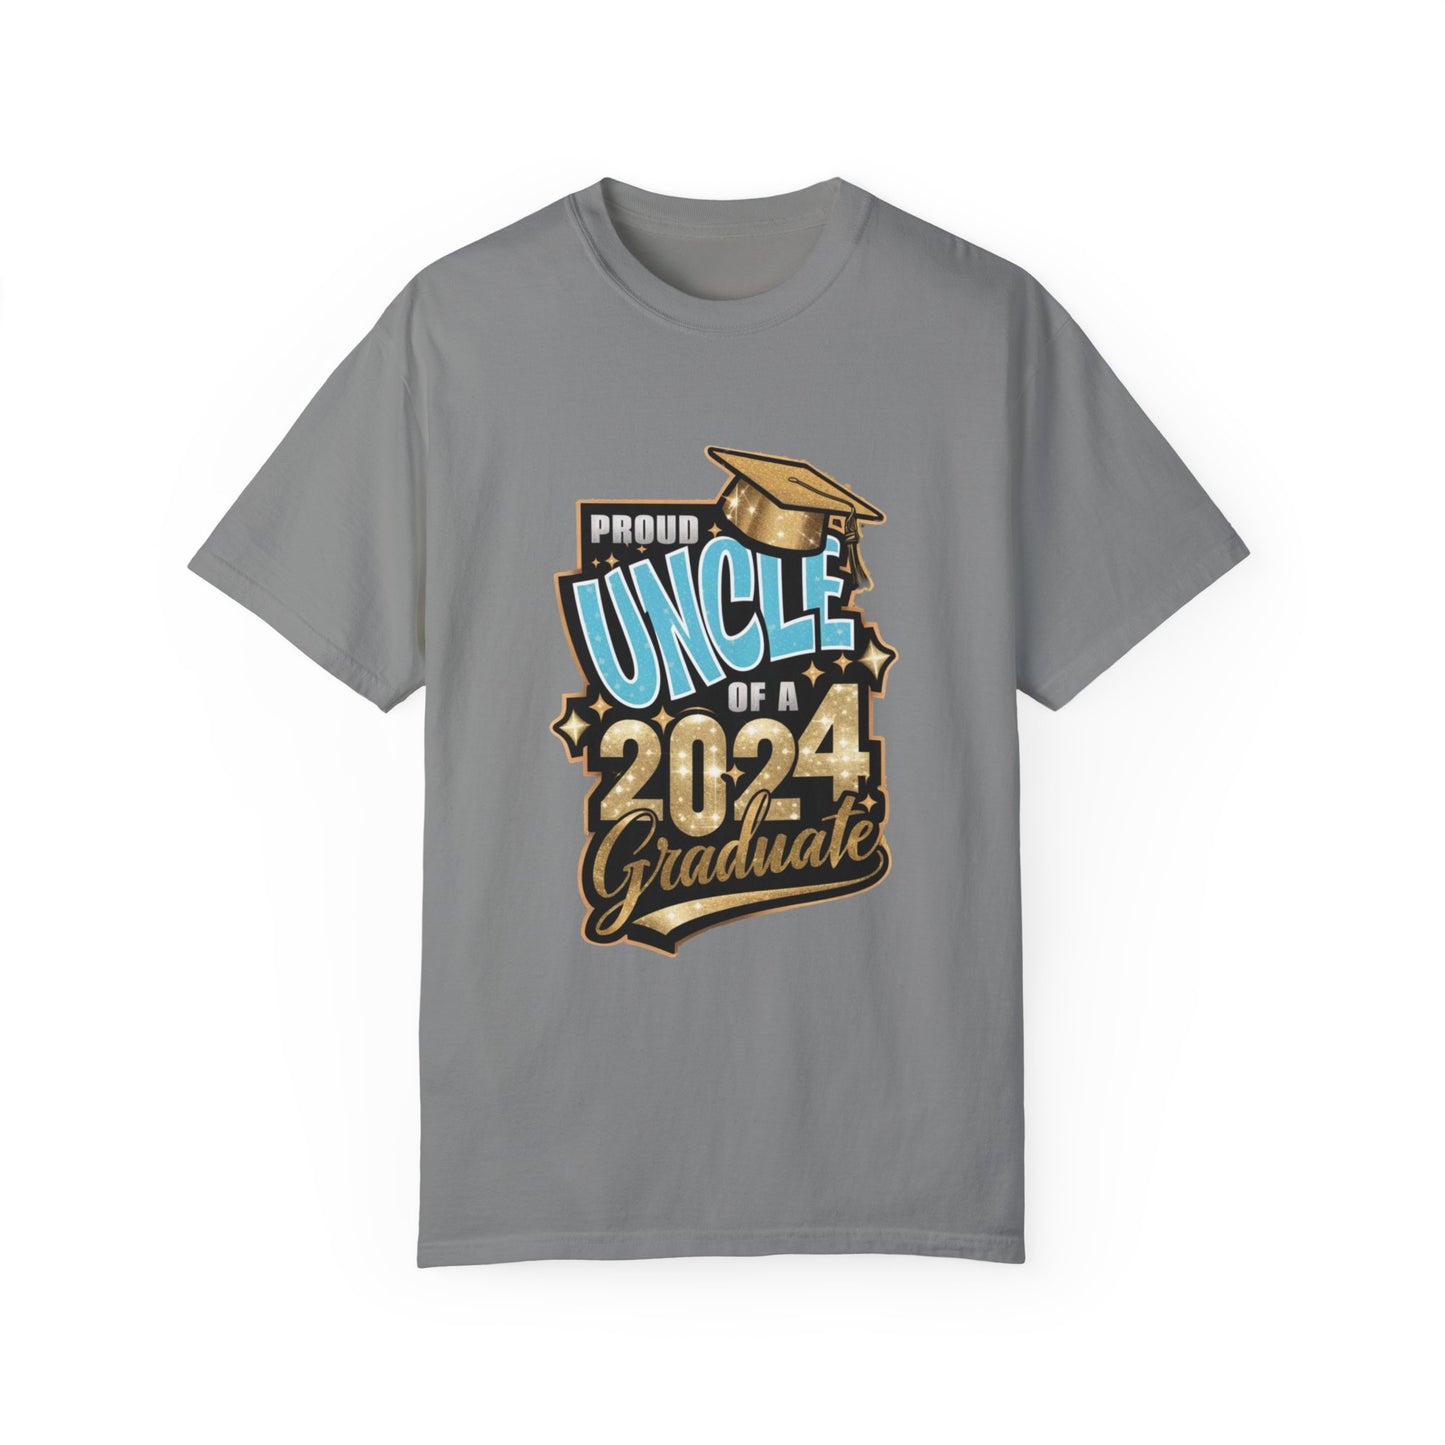 Proud Uncle of a 2024 Graduate Unisex Garment-dyed T-shirt Cotton Funny Humorous Graphic Soft Premium Unisex Men Women Granite T-shirt Birthday Gift-4